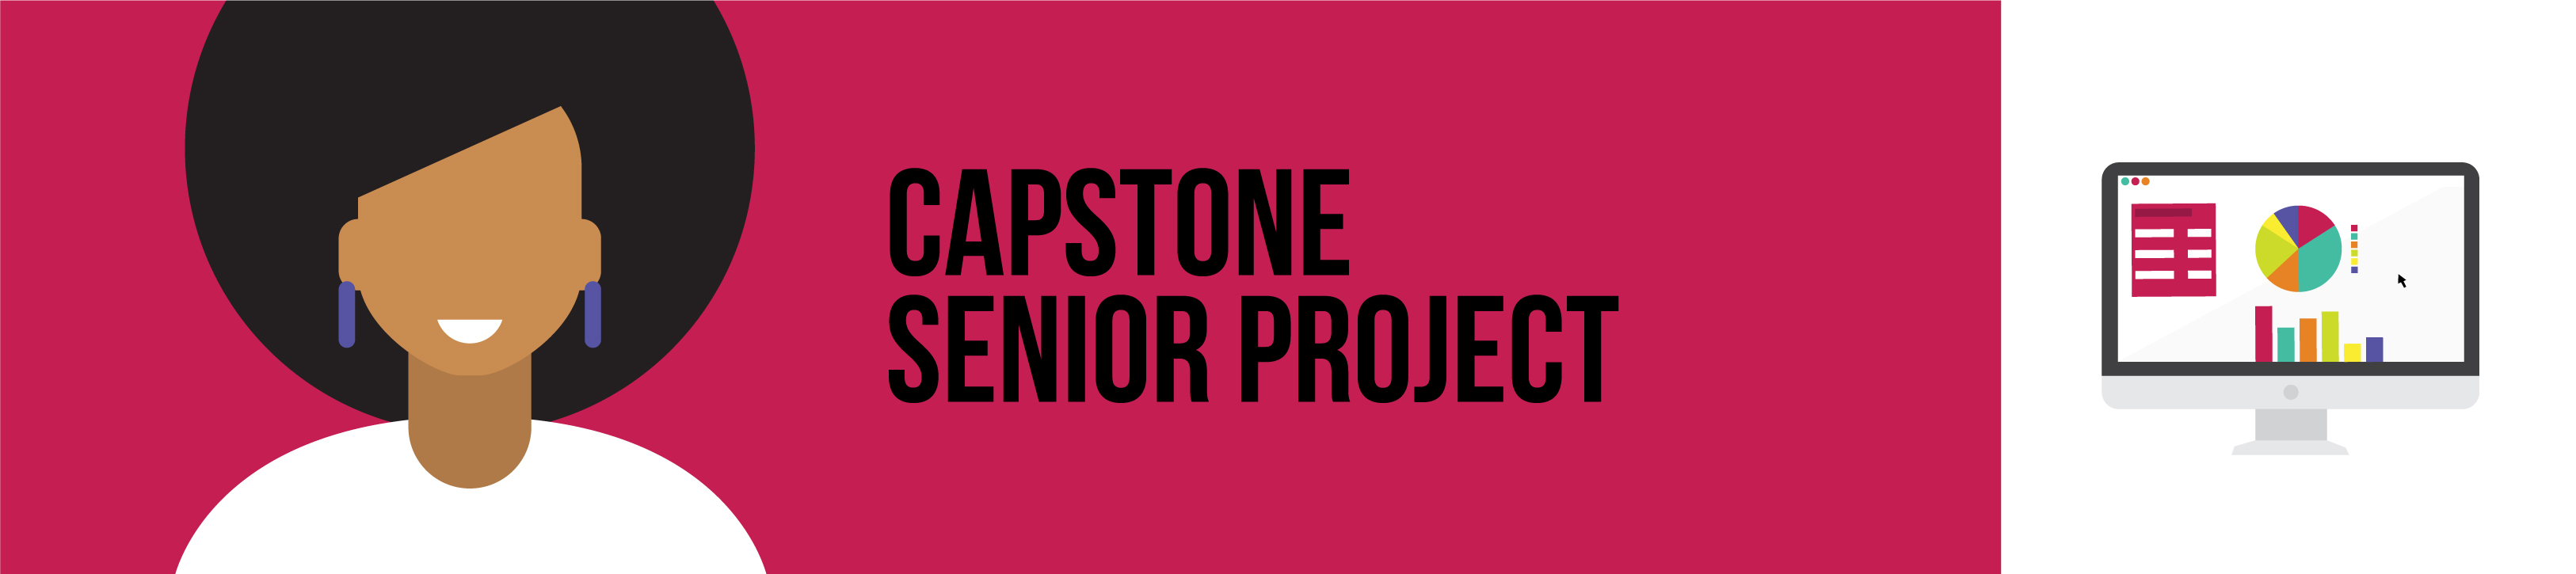 capstone senior project